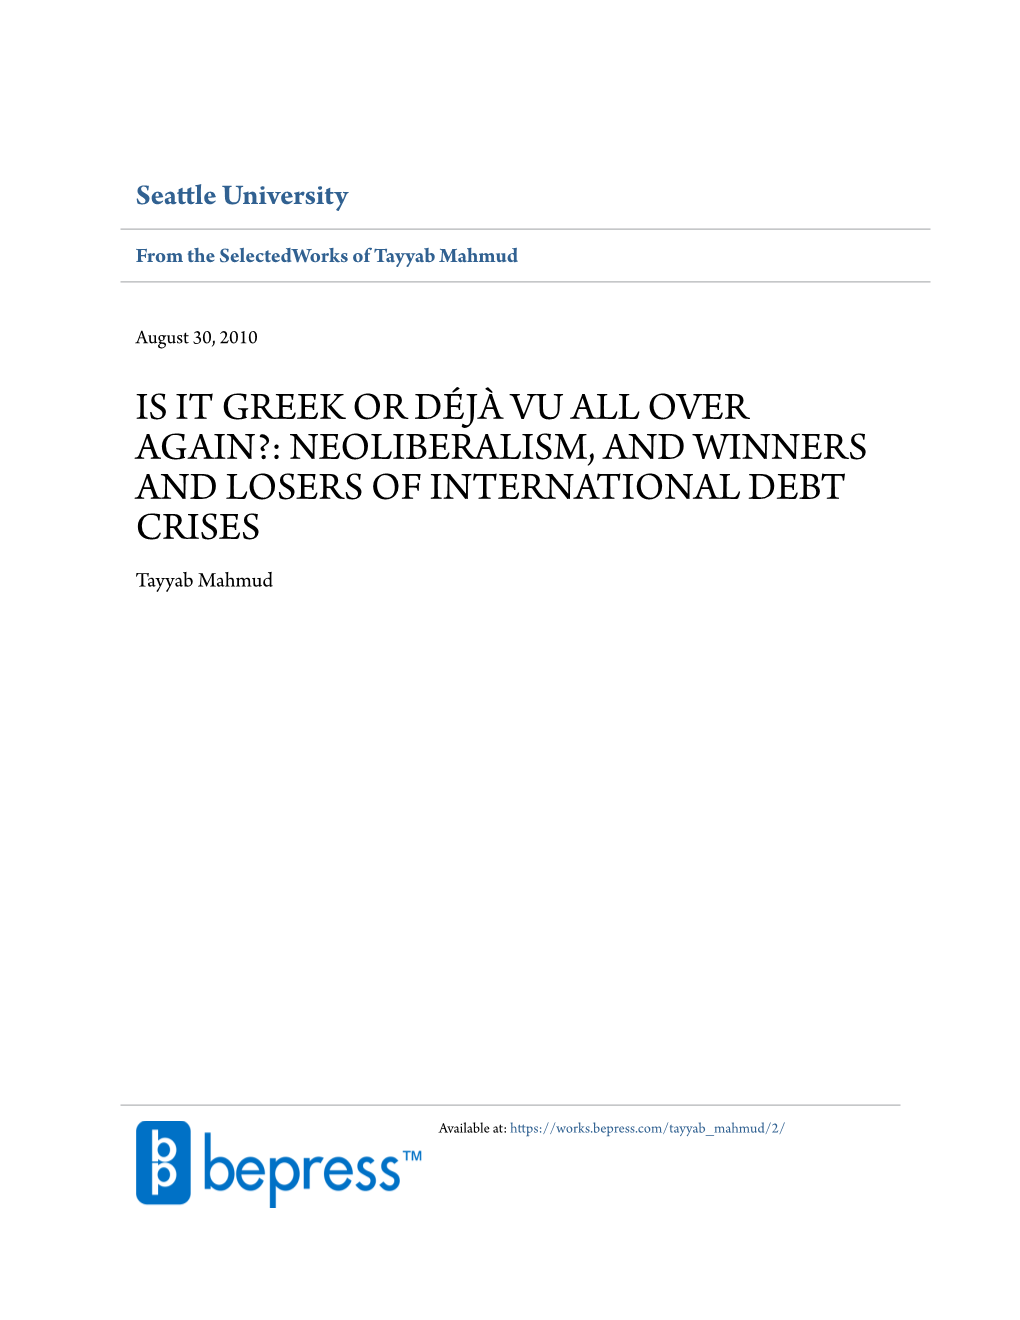 IS IT GREEK OR DÉJÀ VU ALL OVER AGAIN?: NEOLIBERALISM, and WINNERS and LOSERS of INTERNATIONAL DEBT CRISES Tayyab Mahmud